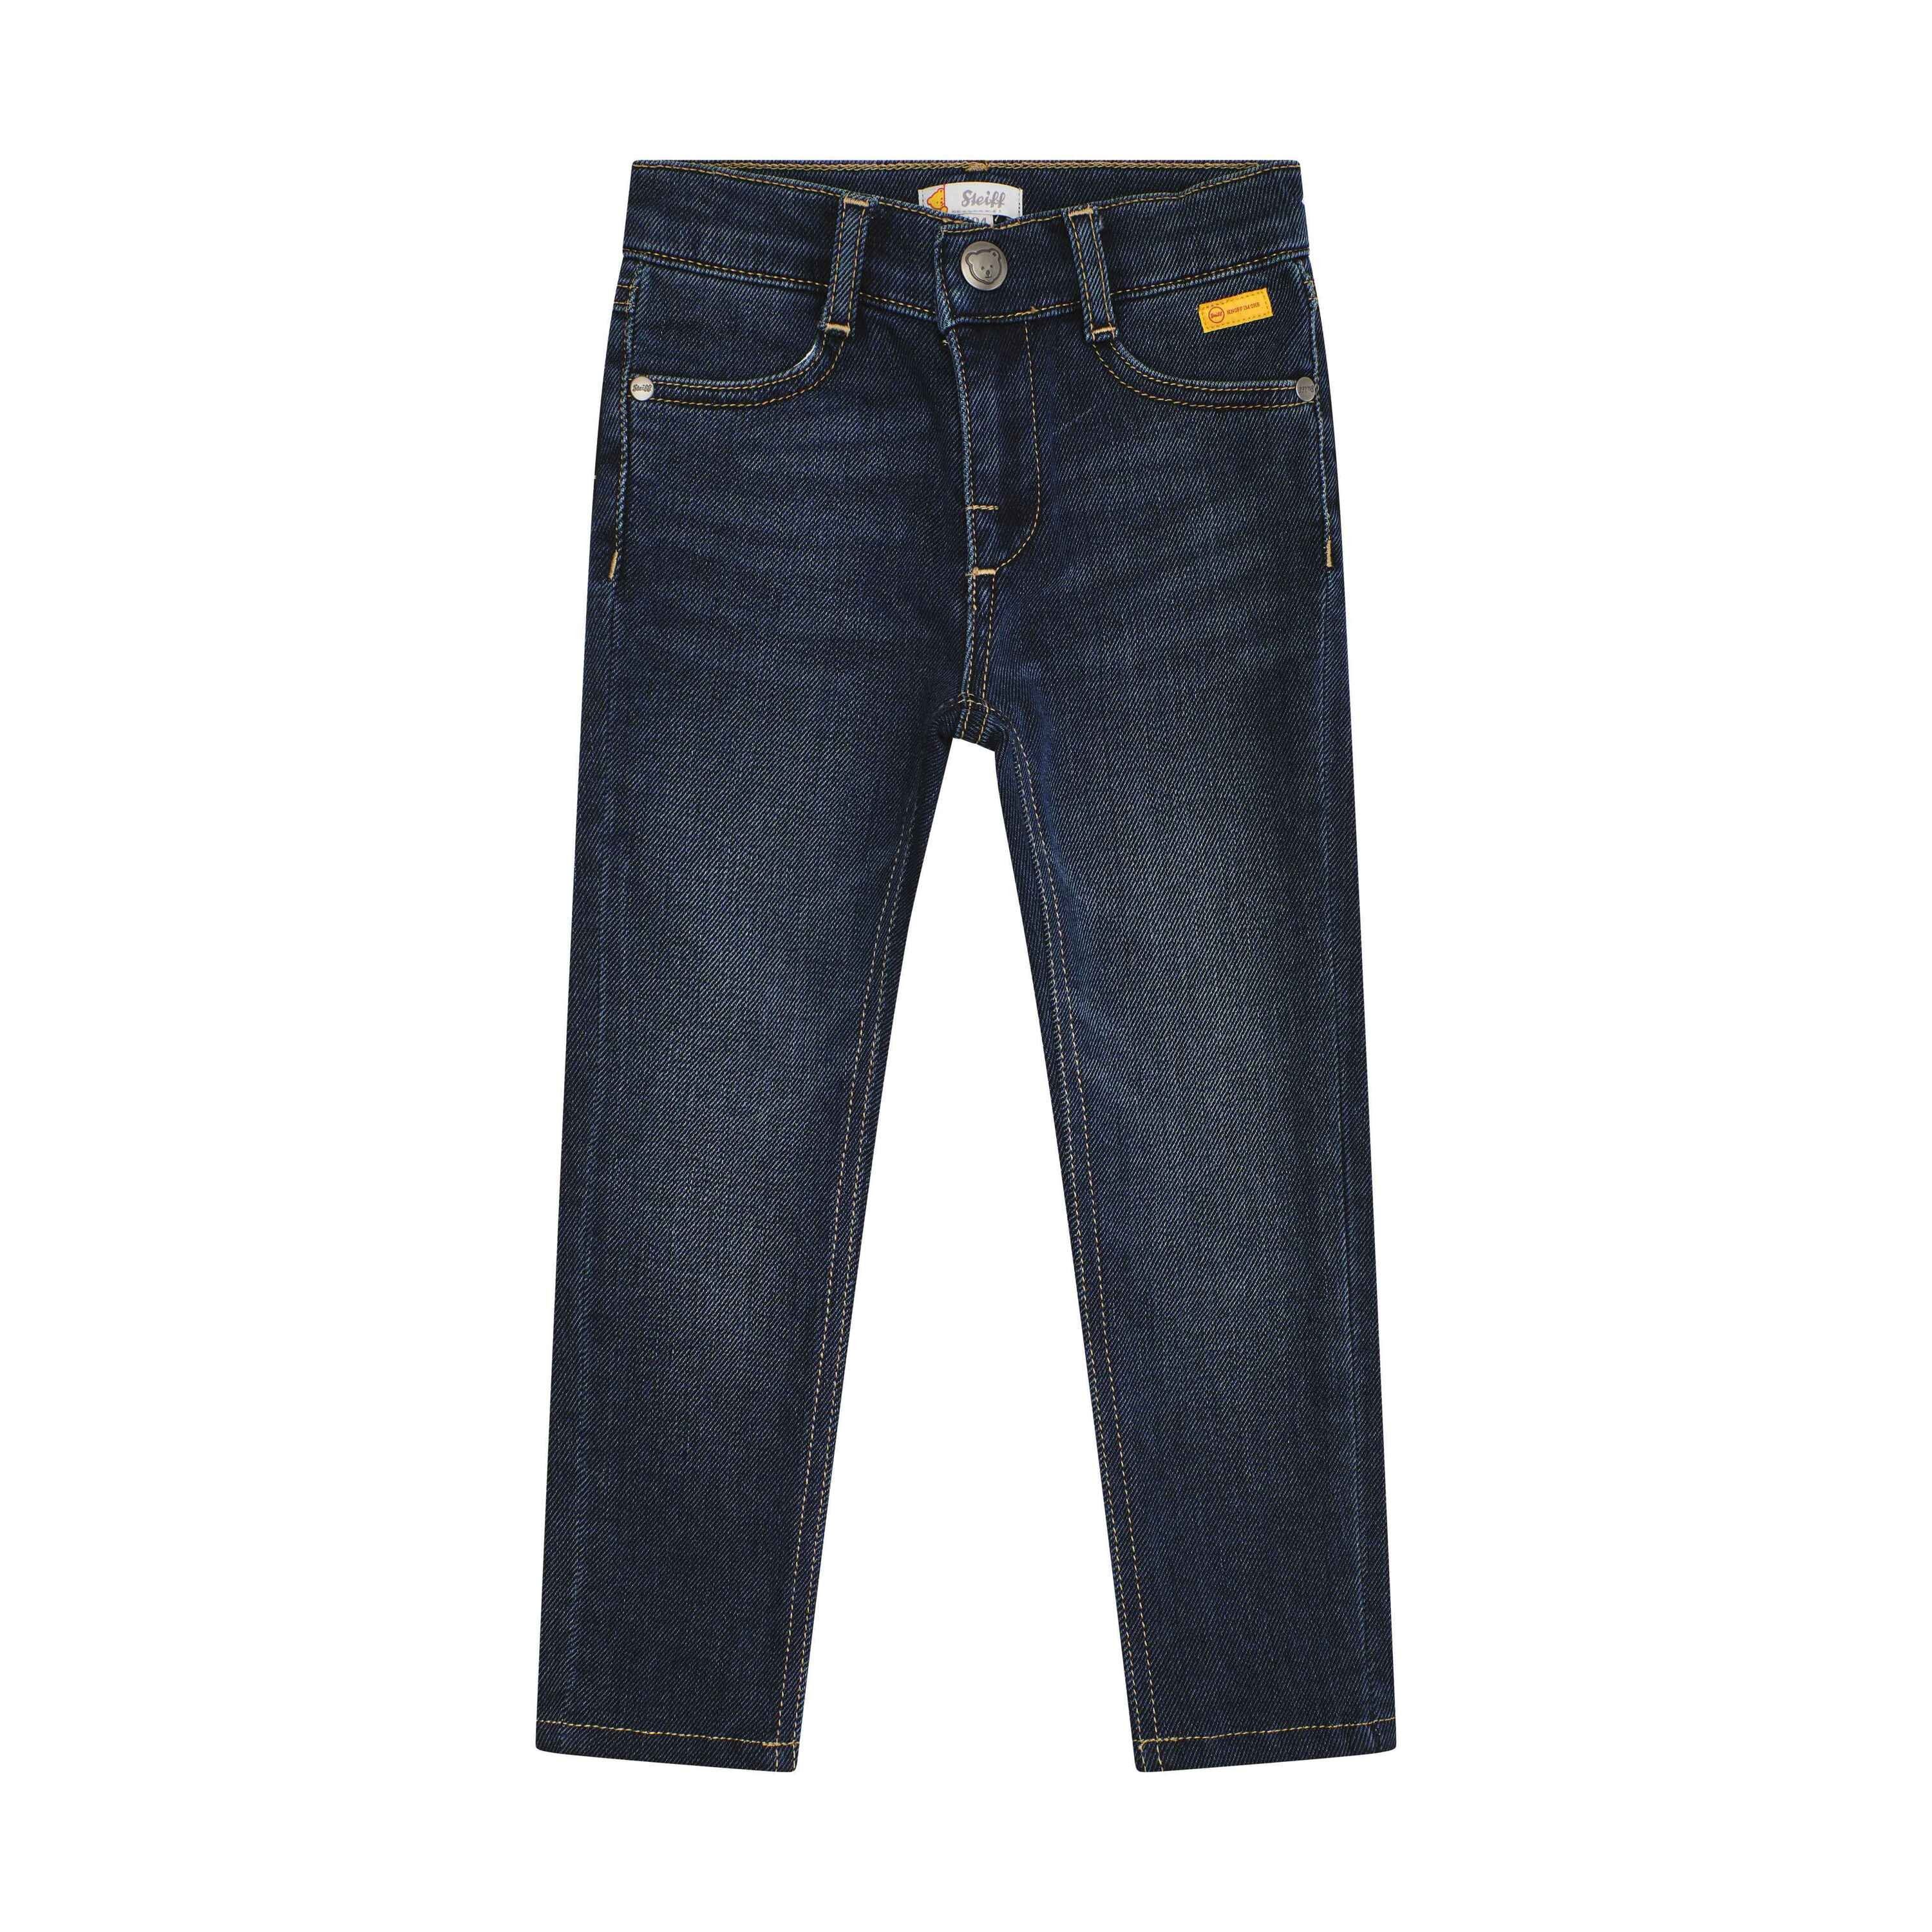 Jeanshose Denim Steiff Regular-fit-Jeans